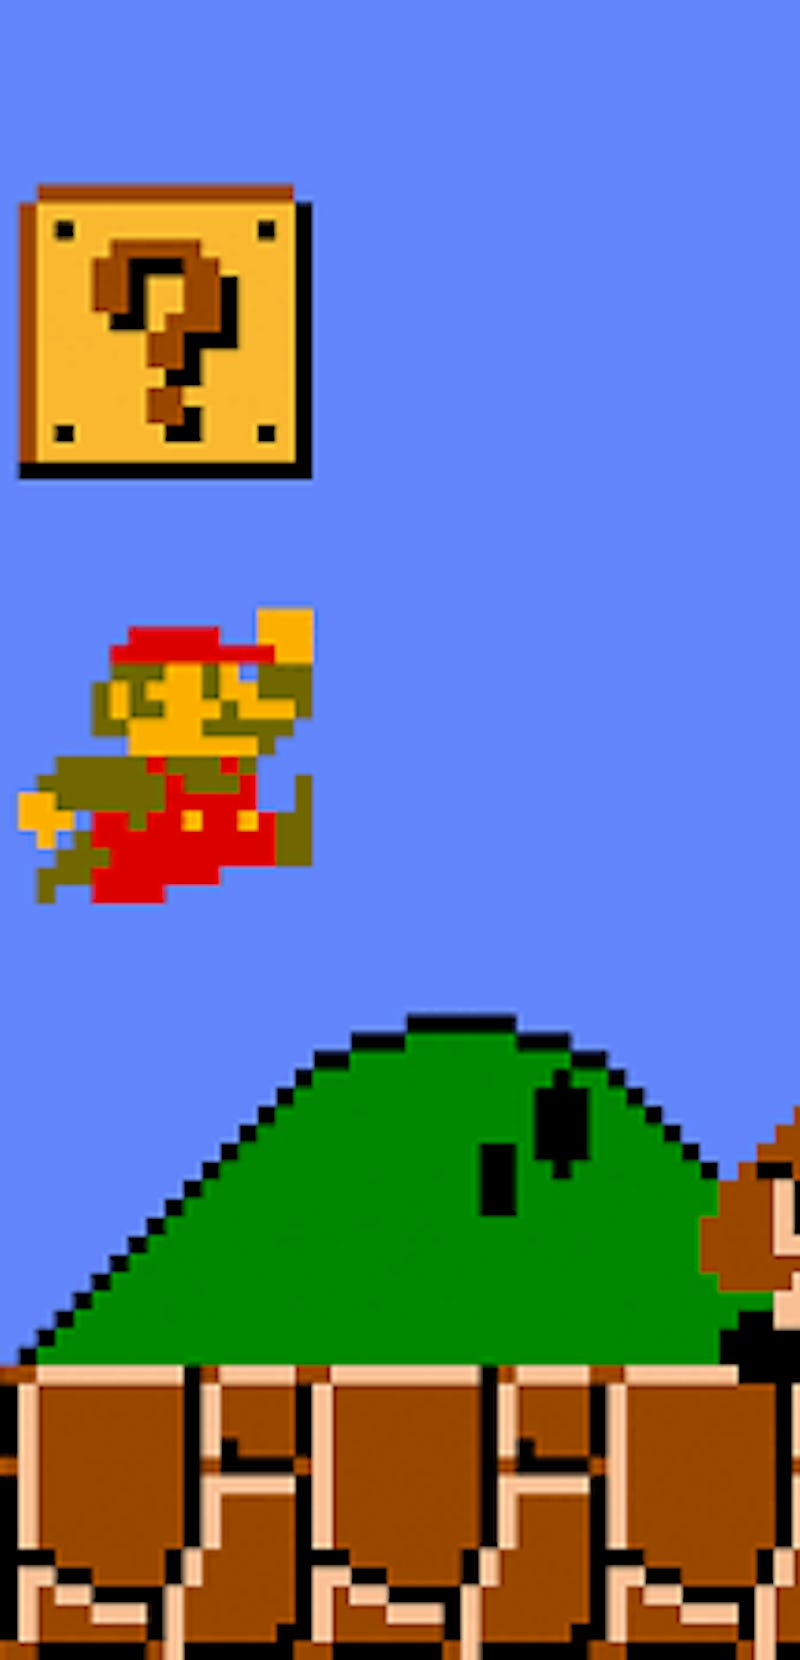 Mario jumping over goomba in Super Mario Bros.